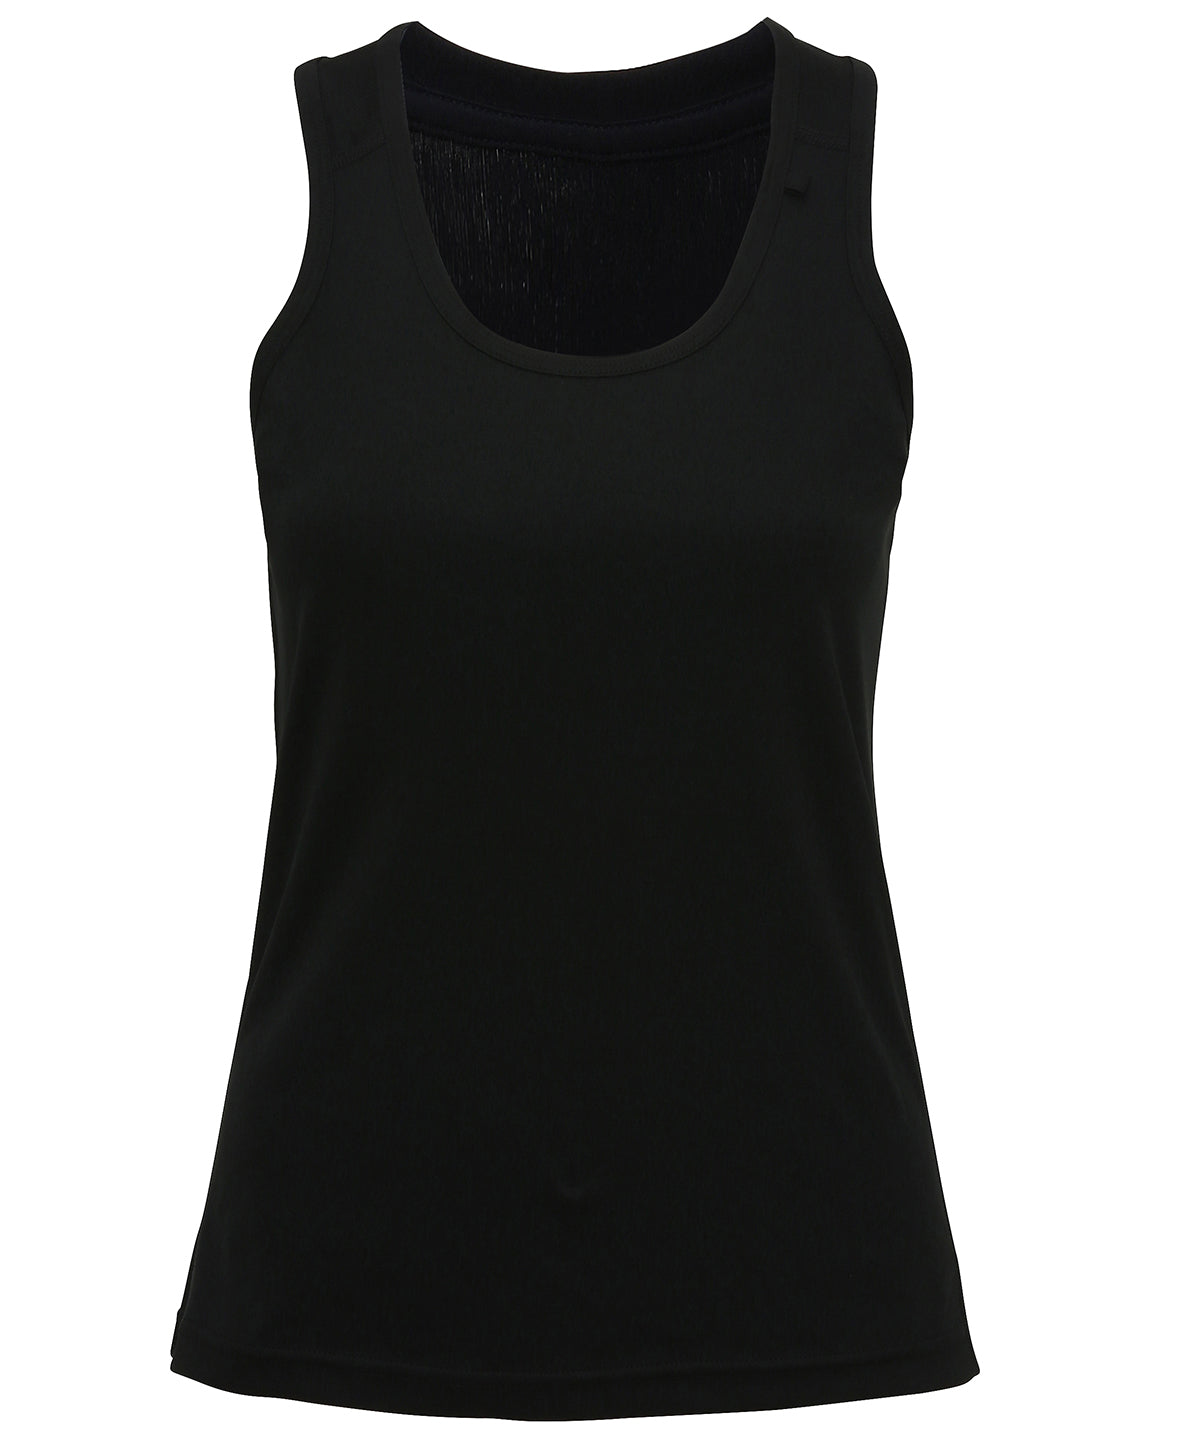 XS Black Paneled Fitness Vest - choose logo